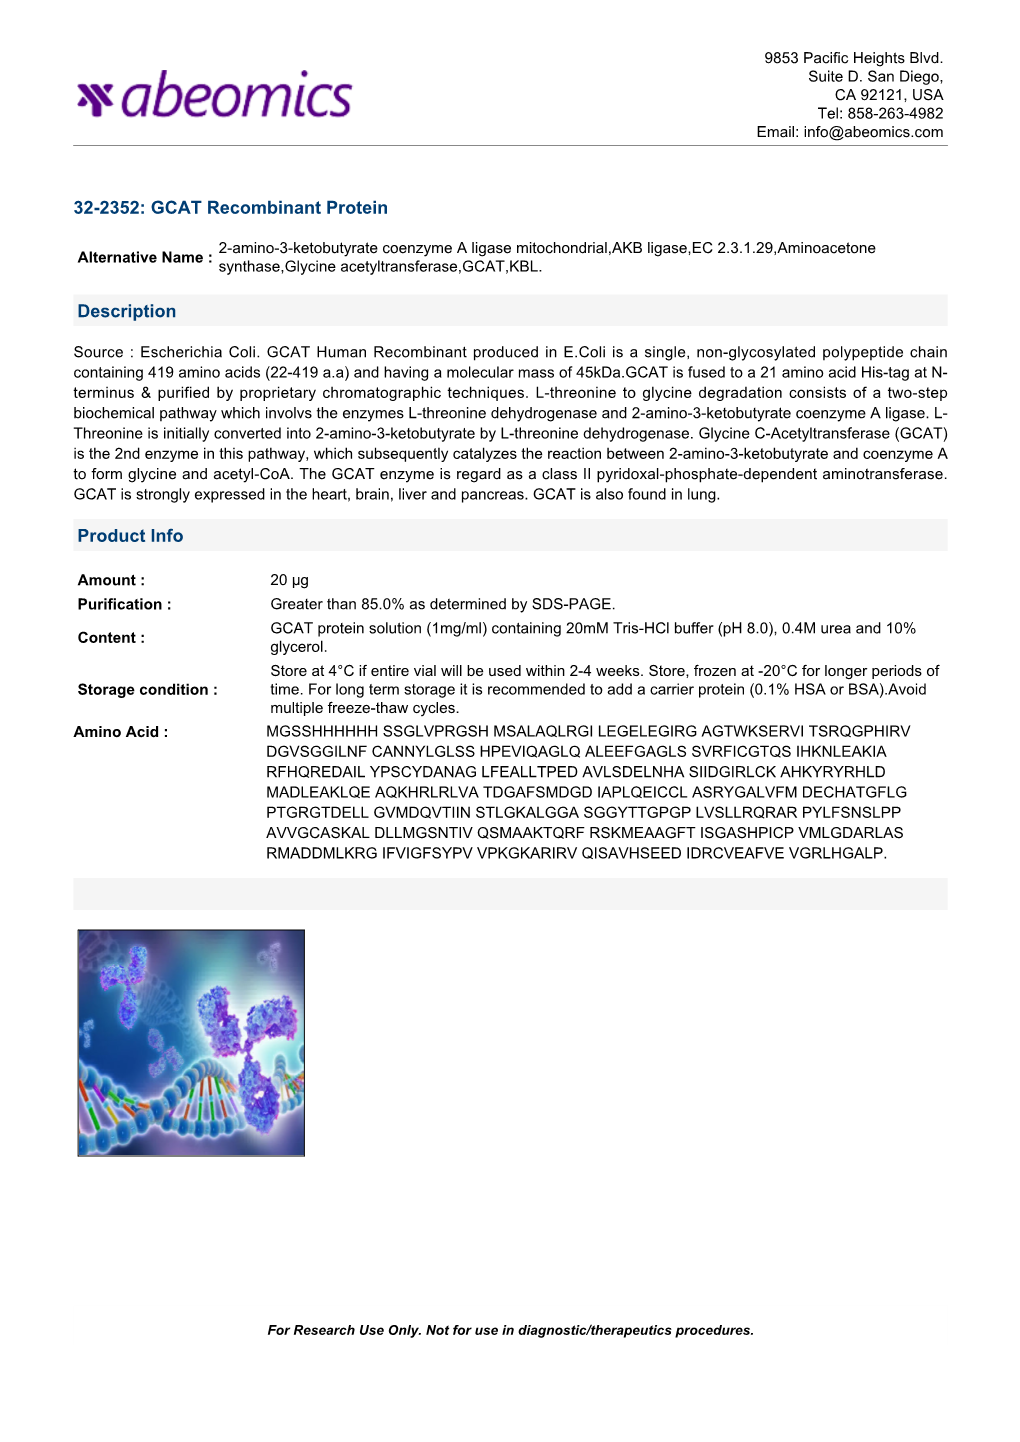 GCAT Recombinant Protein Description Product Info